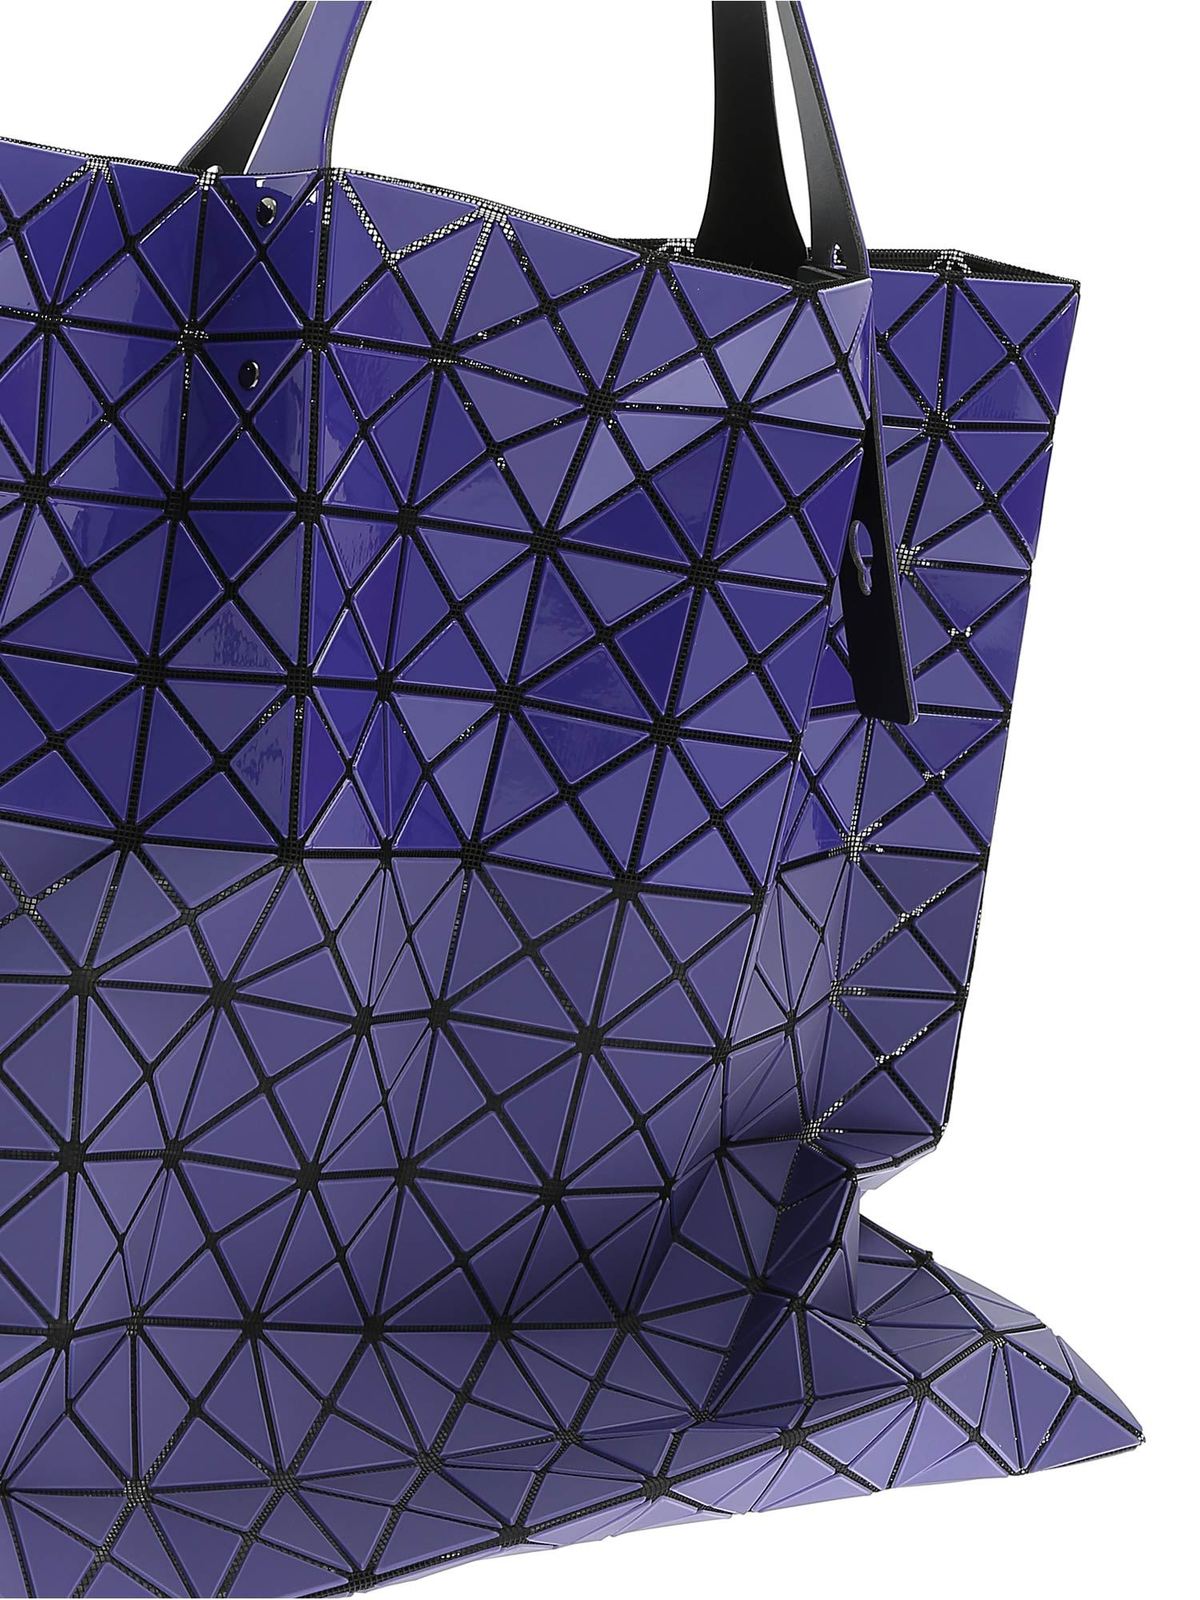 Totes bags Bao Bao Issey Miyake - Prism Bi-Texture bag in purple -  BB98AG54381